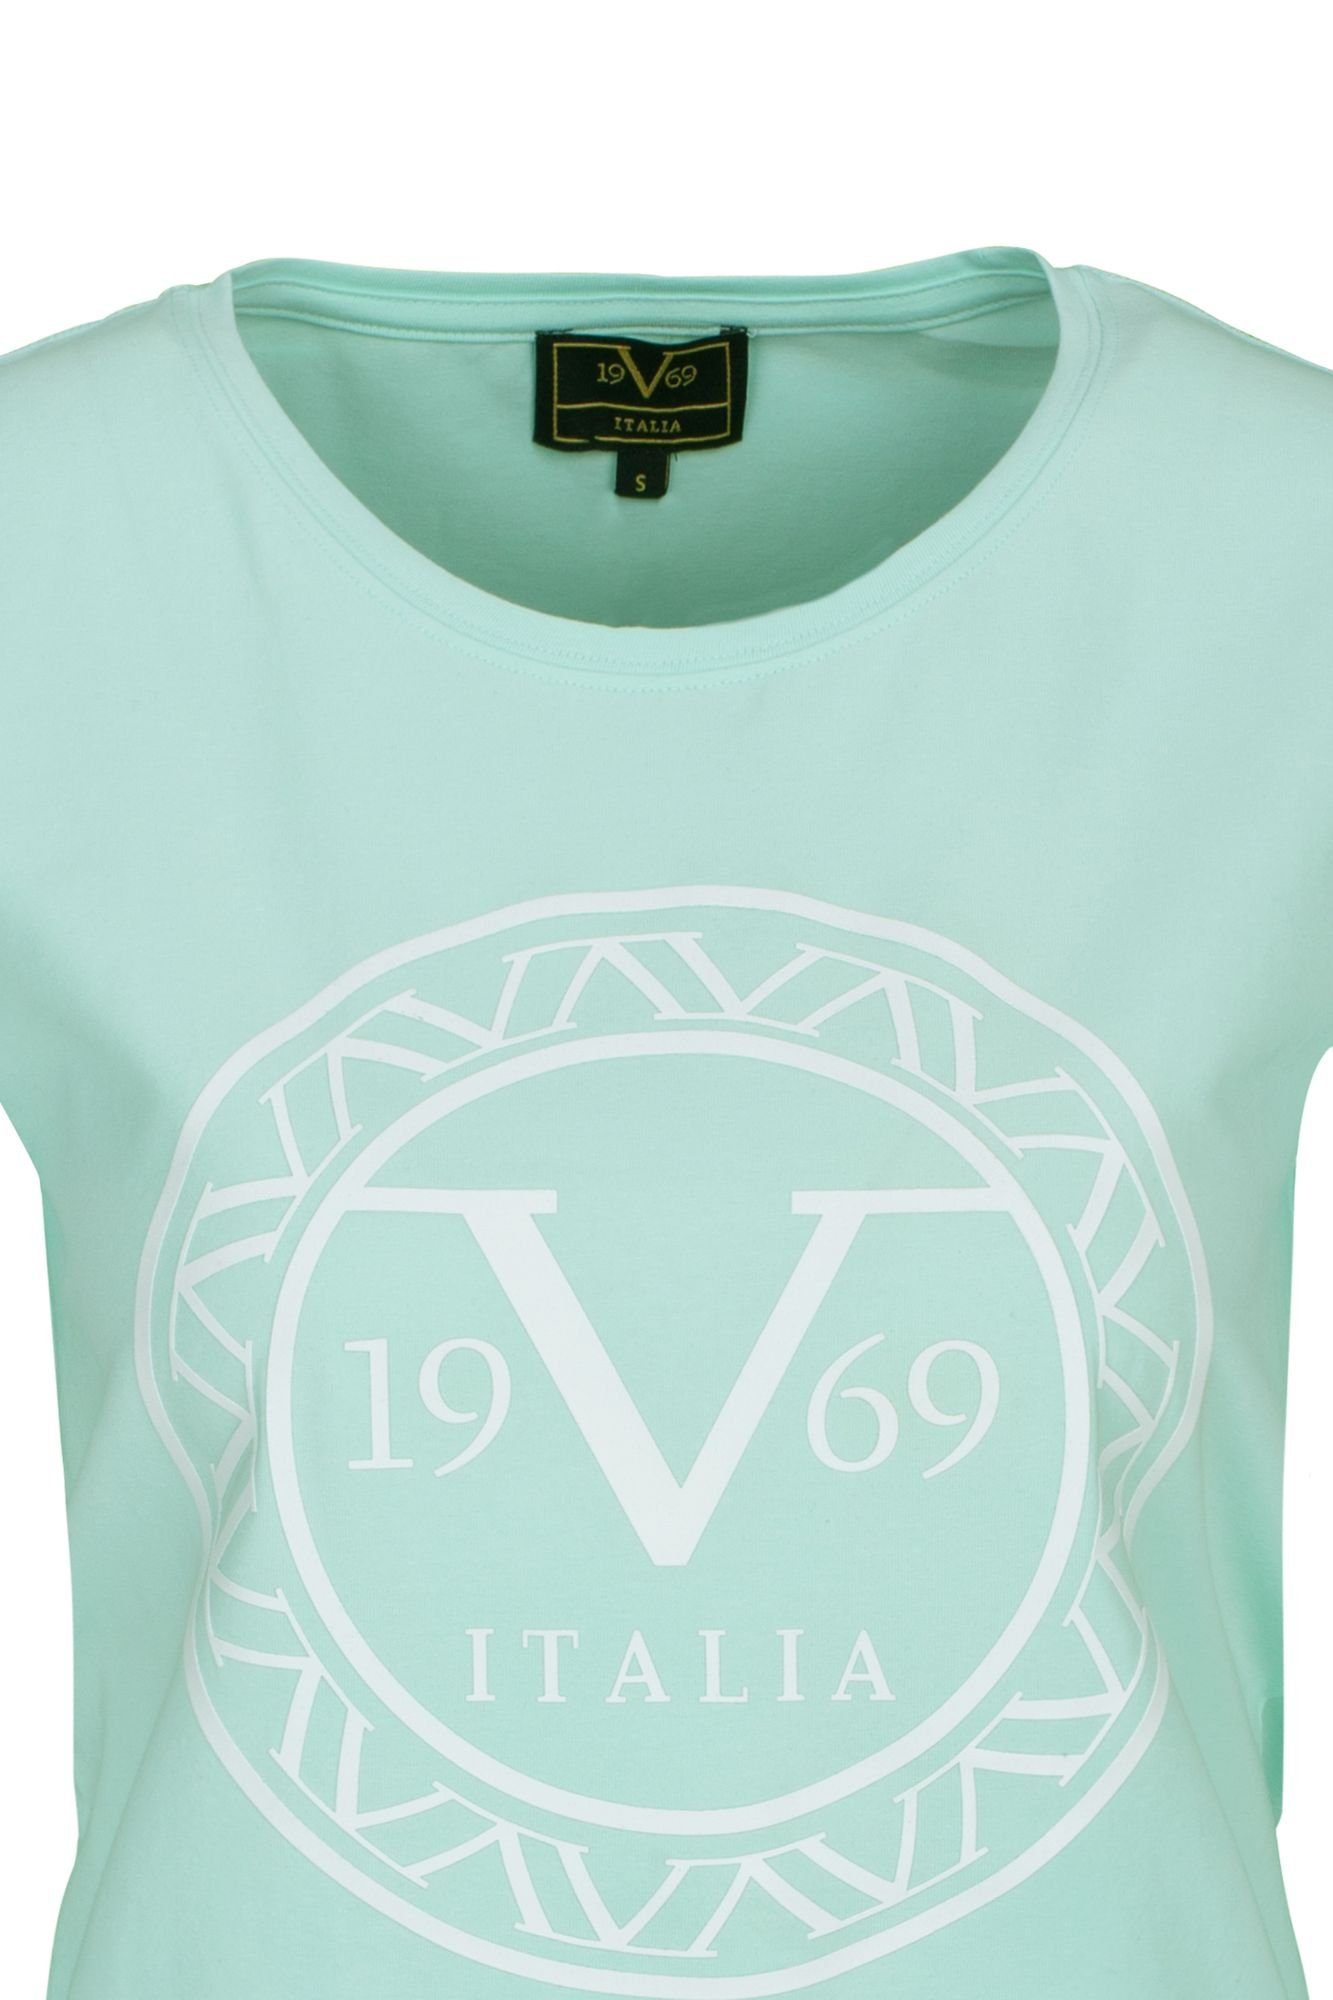 19V69 Italia by Versace Irina T-Shirt